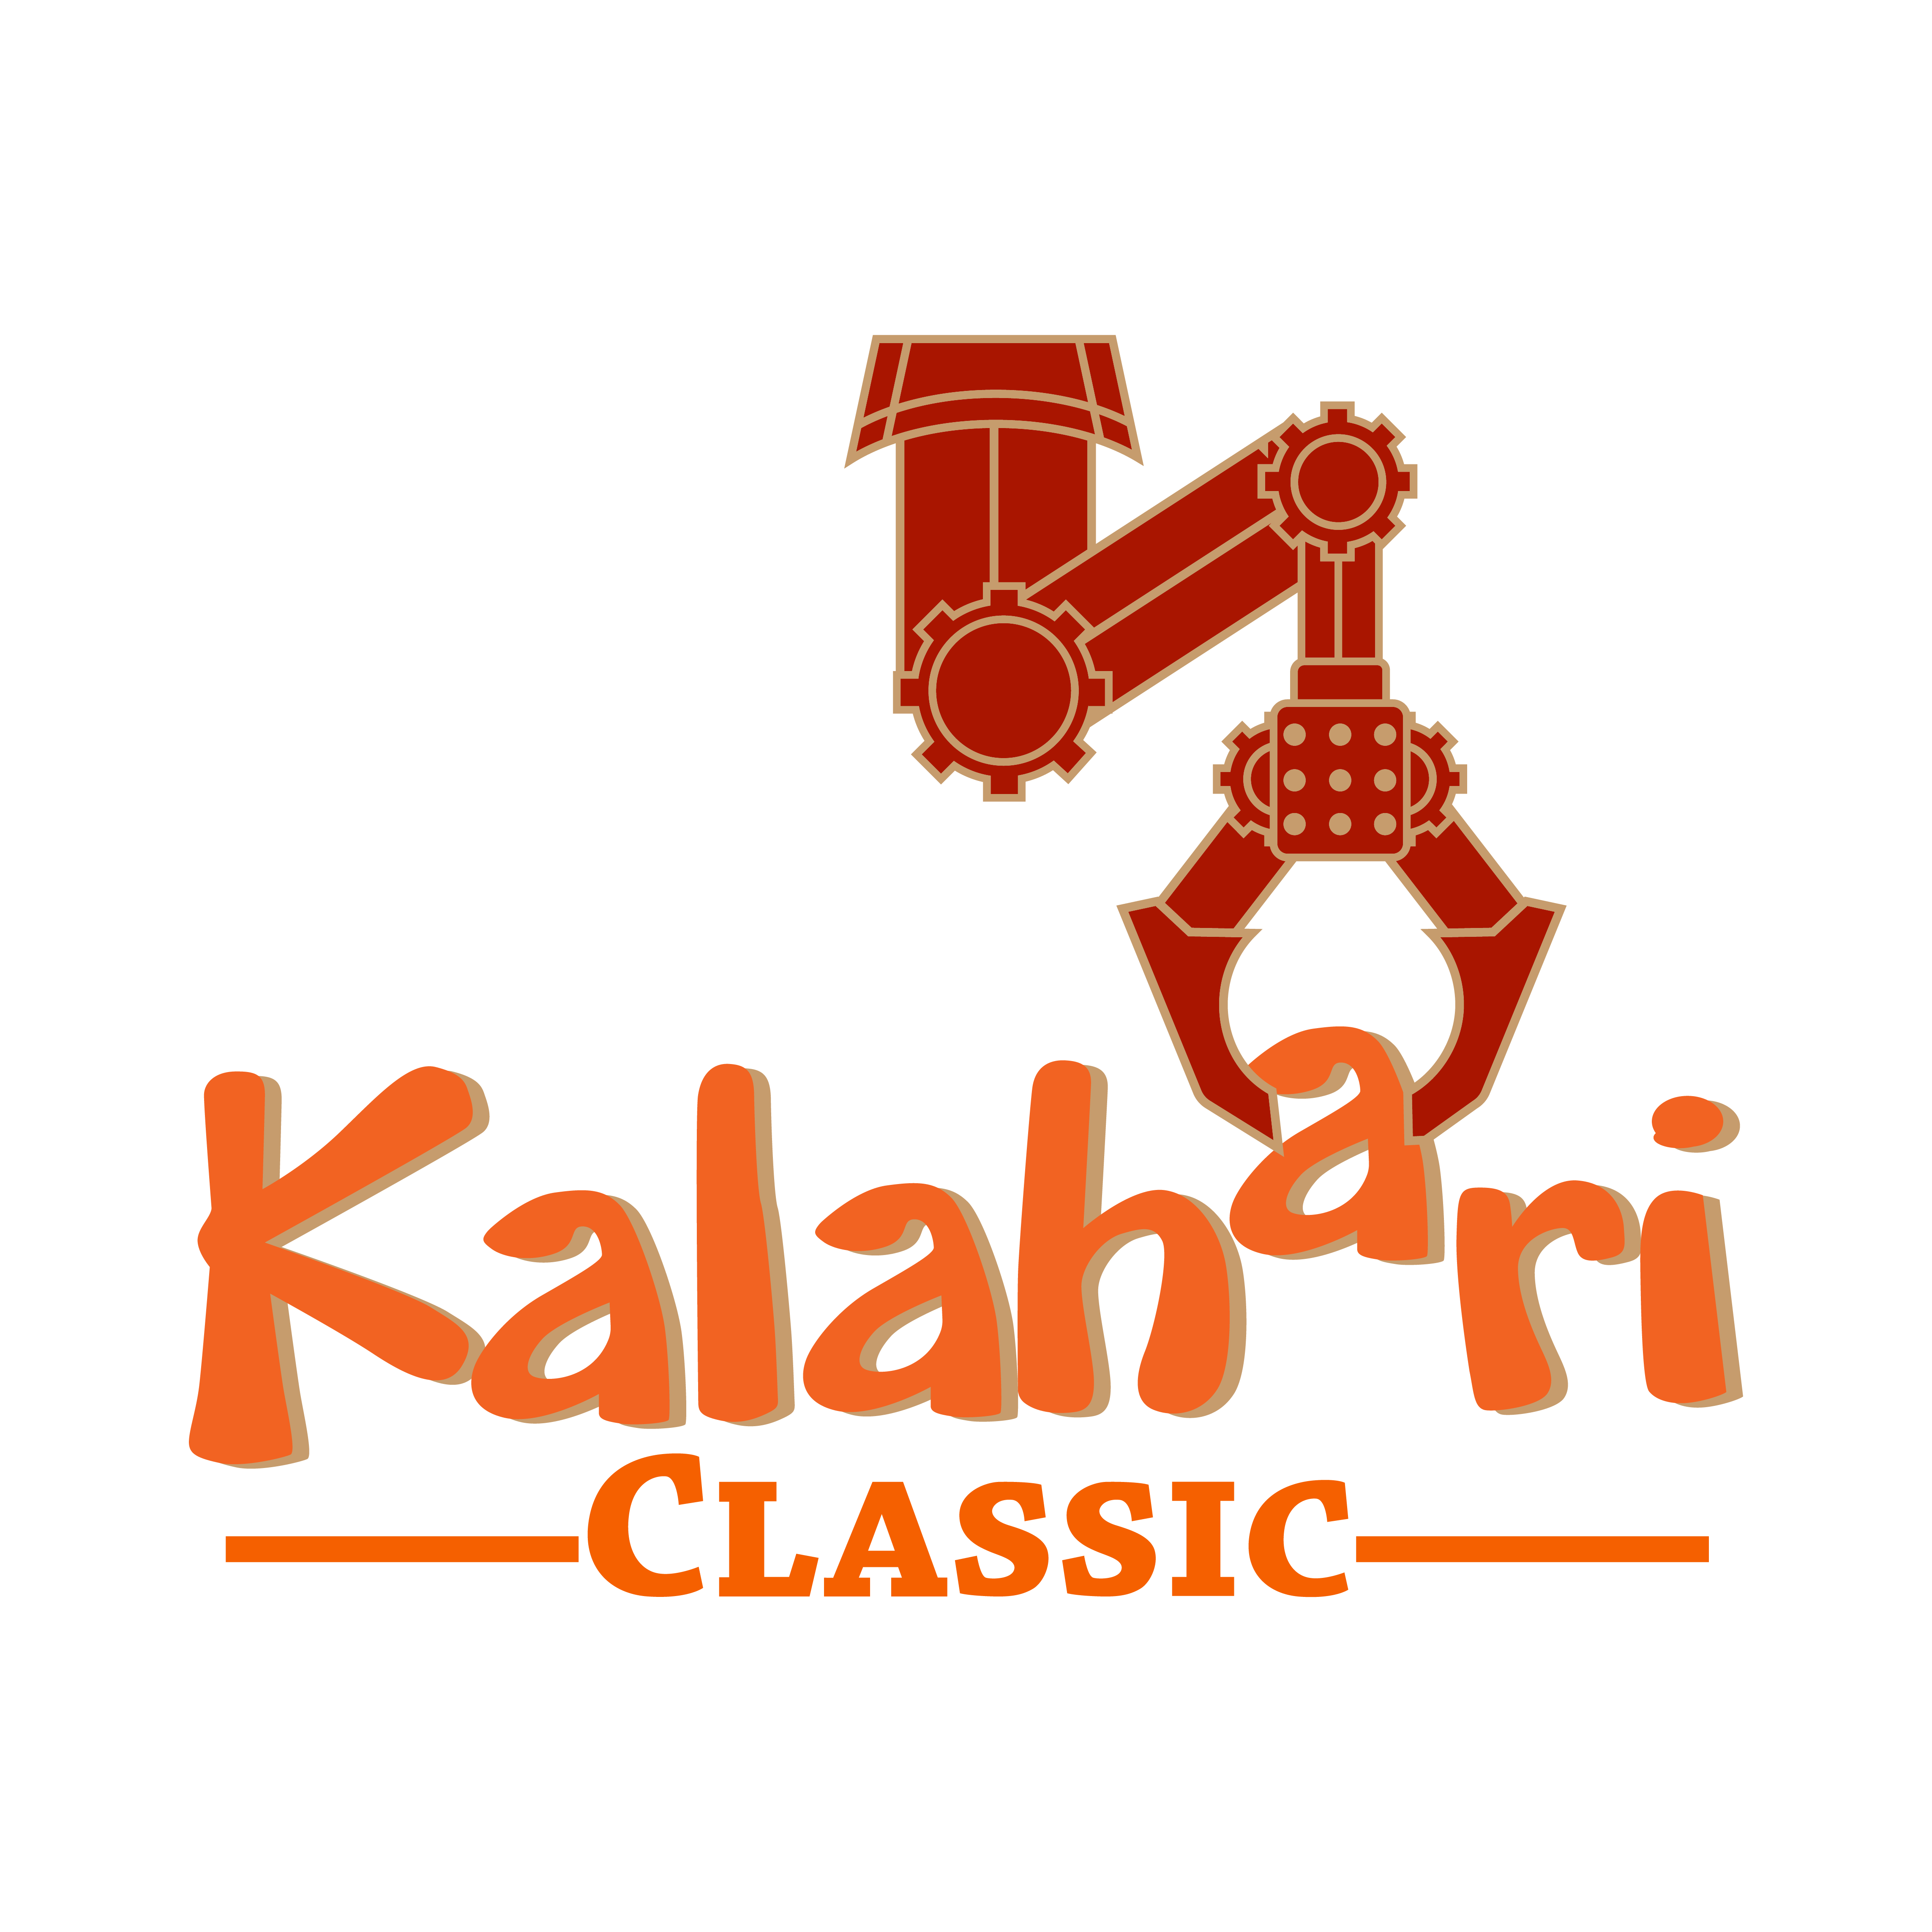 Kalahari Classic VRC Signature Event (MS Only)